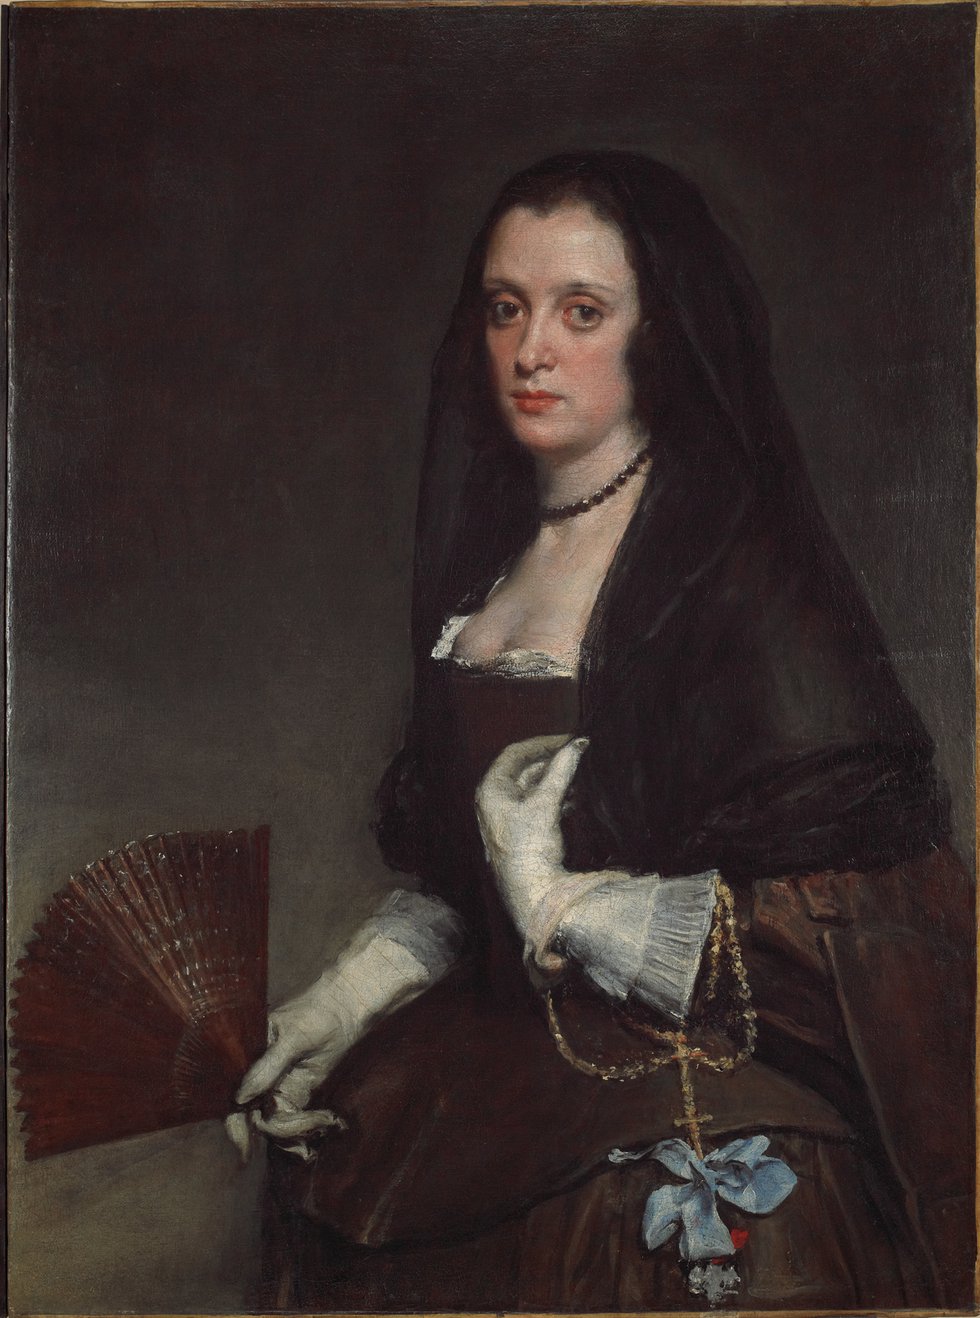 A portrait of a woman with a fan